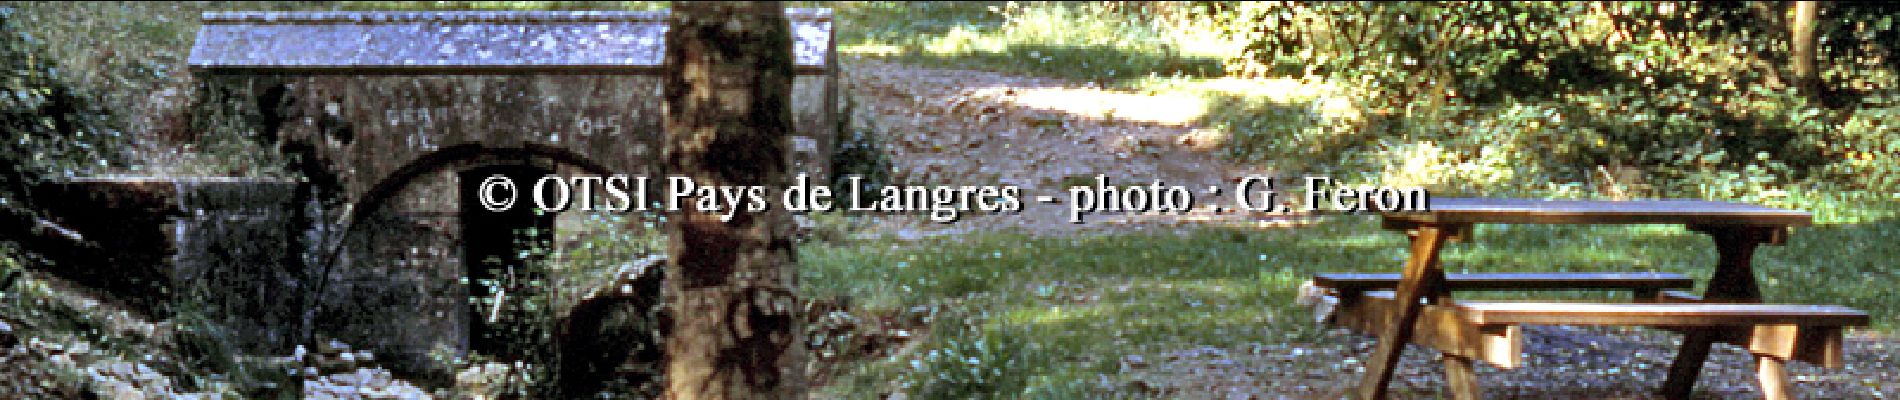 Trail Walking Saints-Geosmes - Source de la Marne - Balesmes sur Marne - Photo